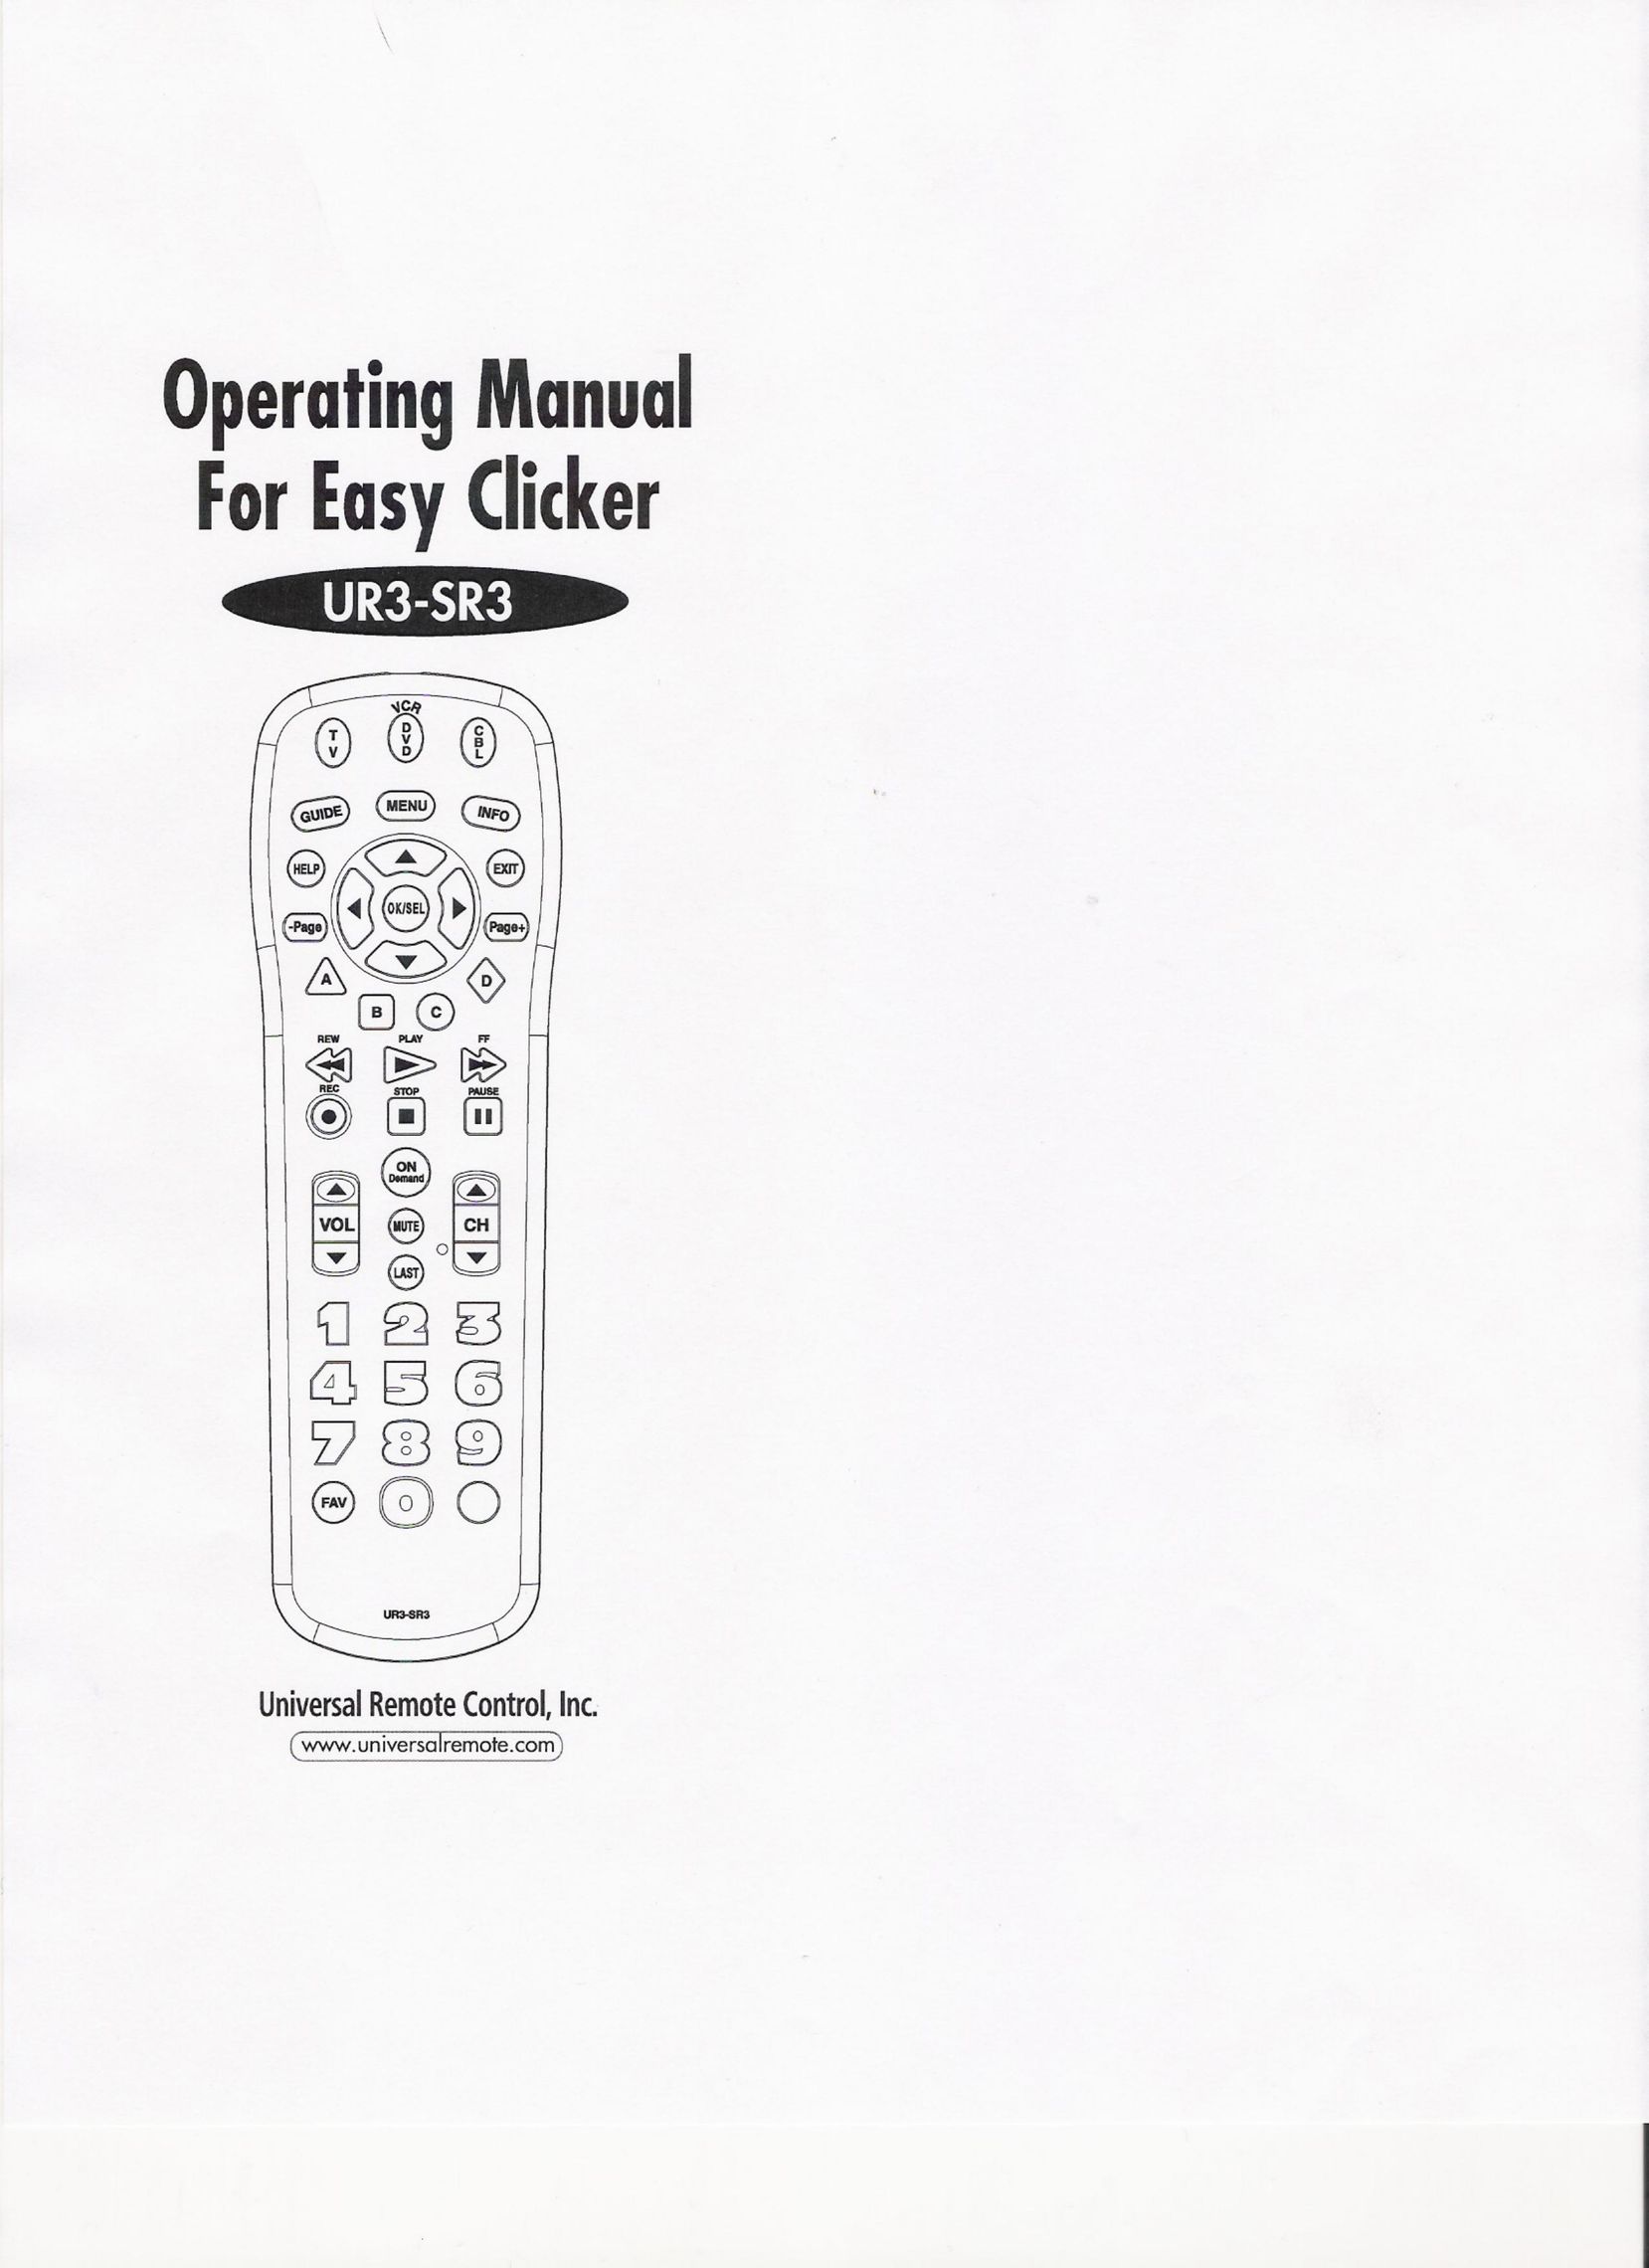 Hitachi UR3-SR3 Universal Remote User Manual